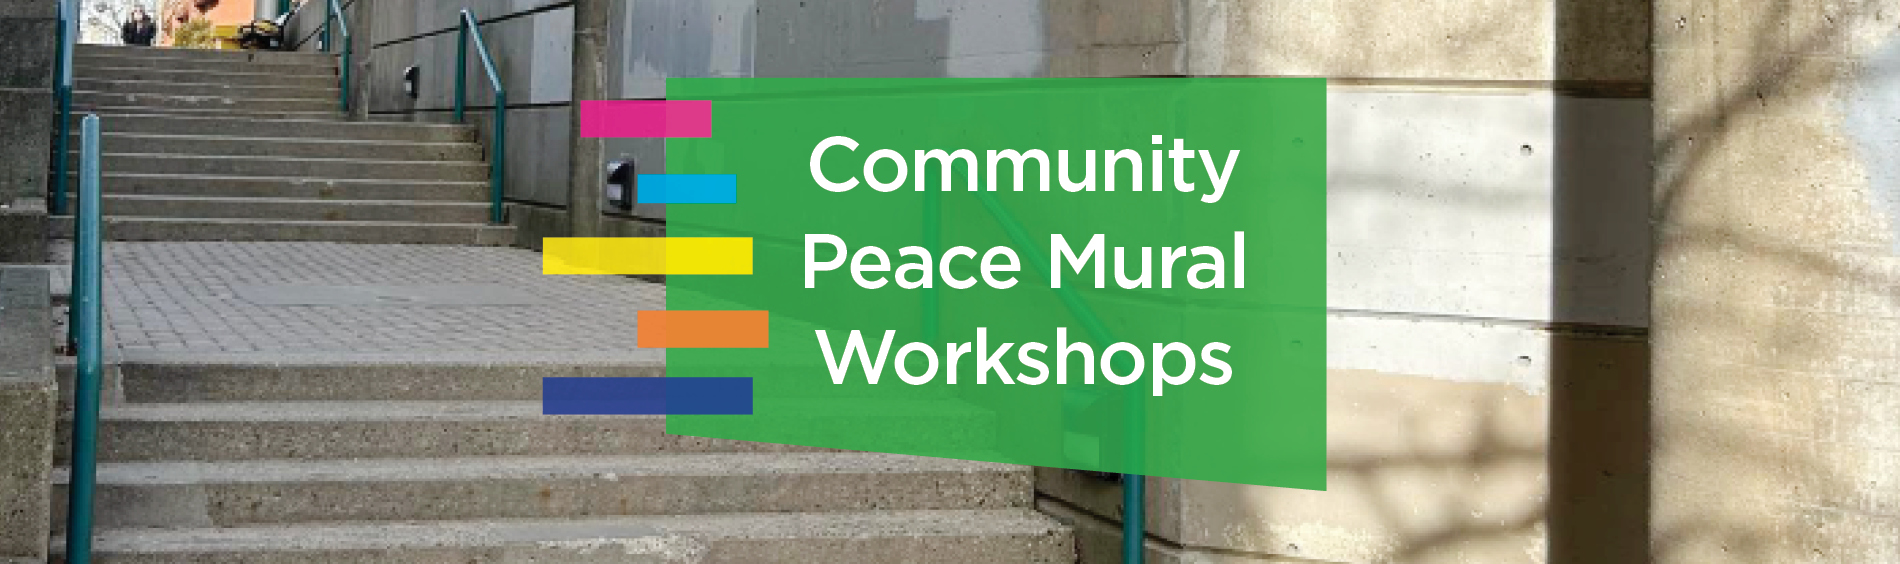 Community Peace Mural Workshops